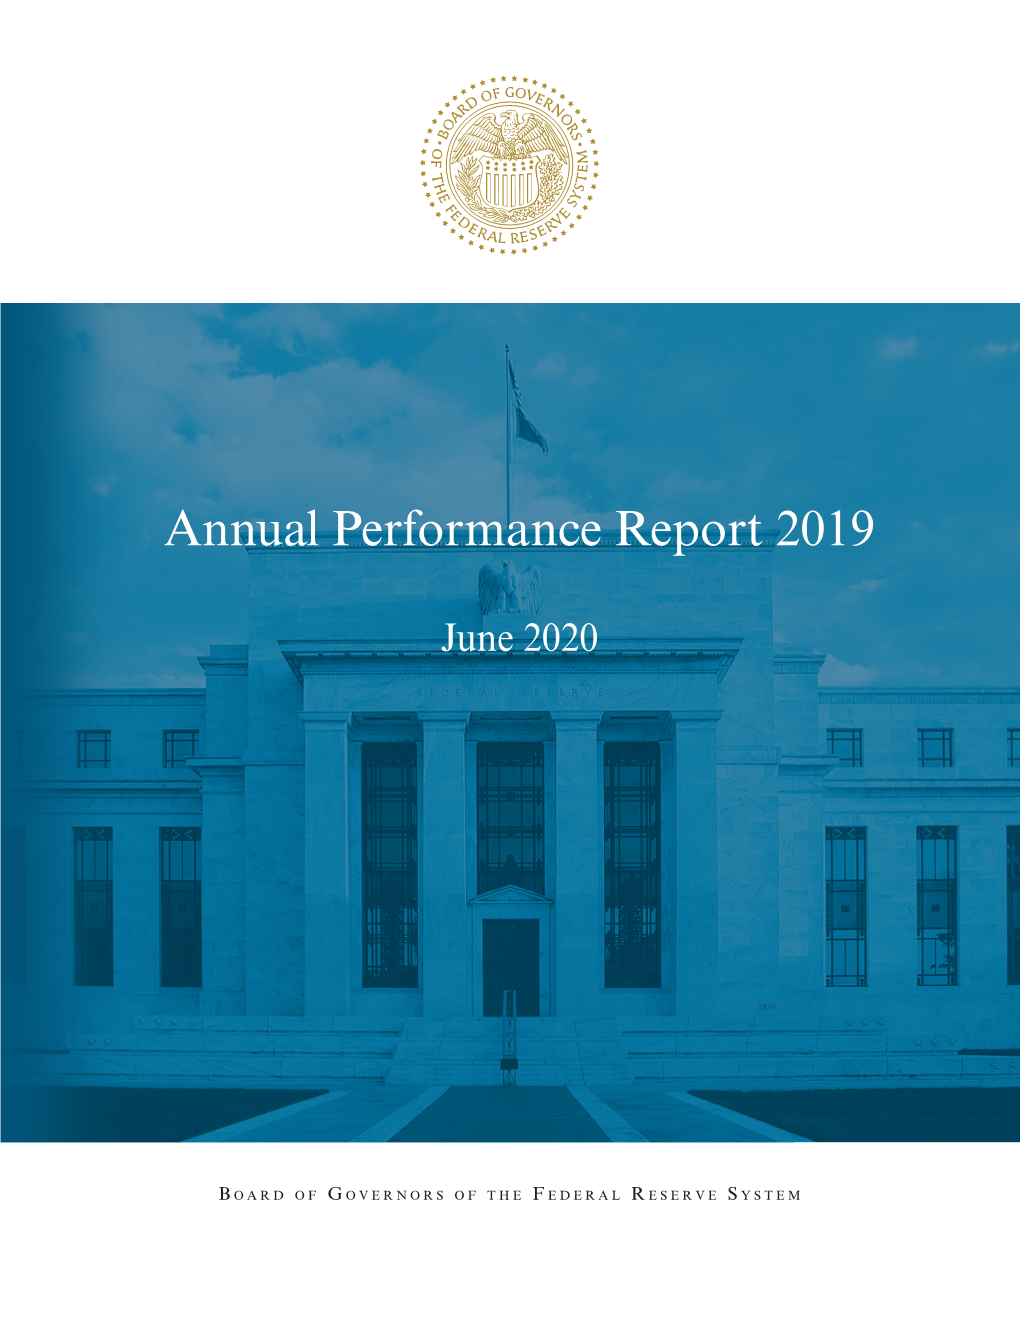 Annual Performance Report 2019, June 2020